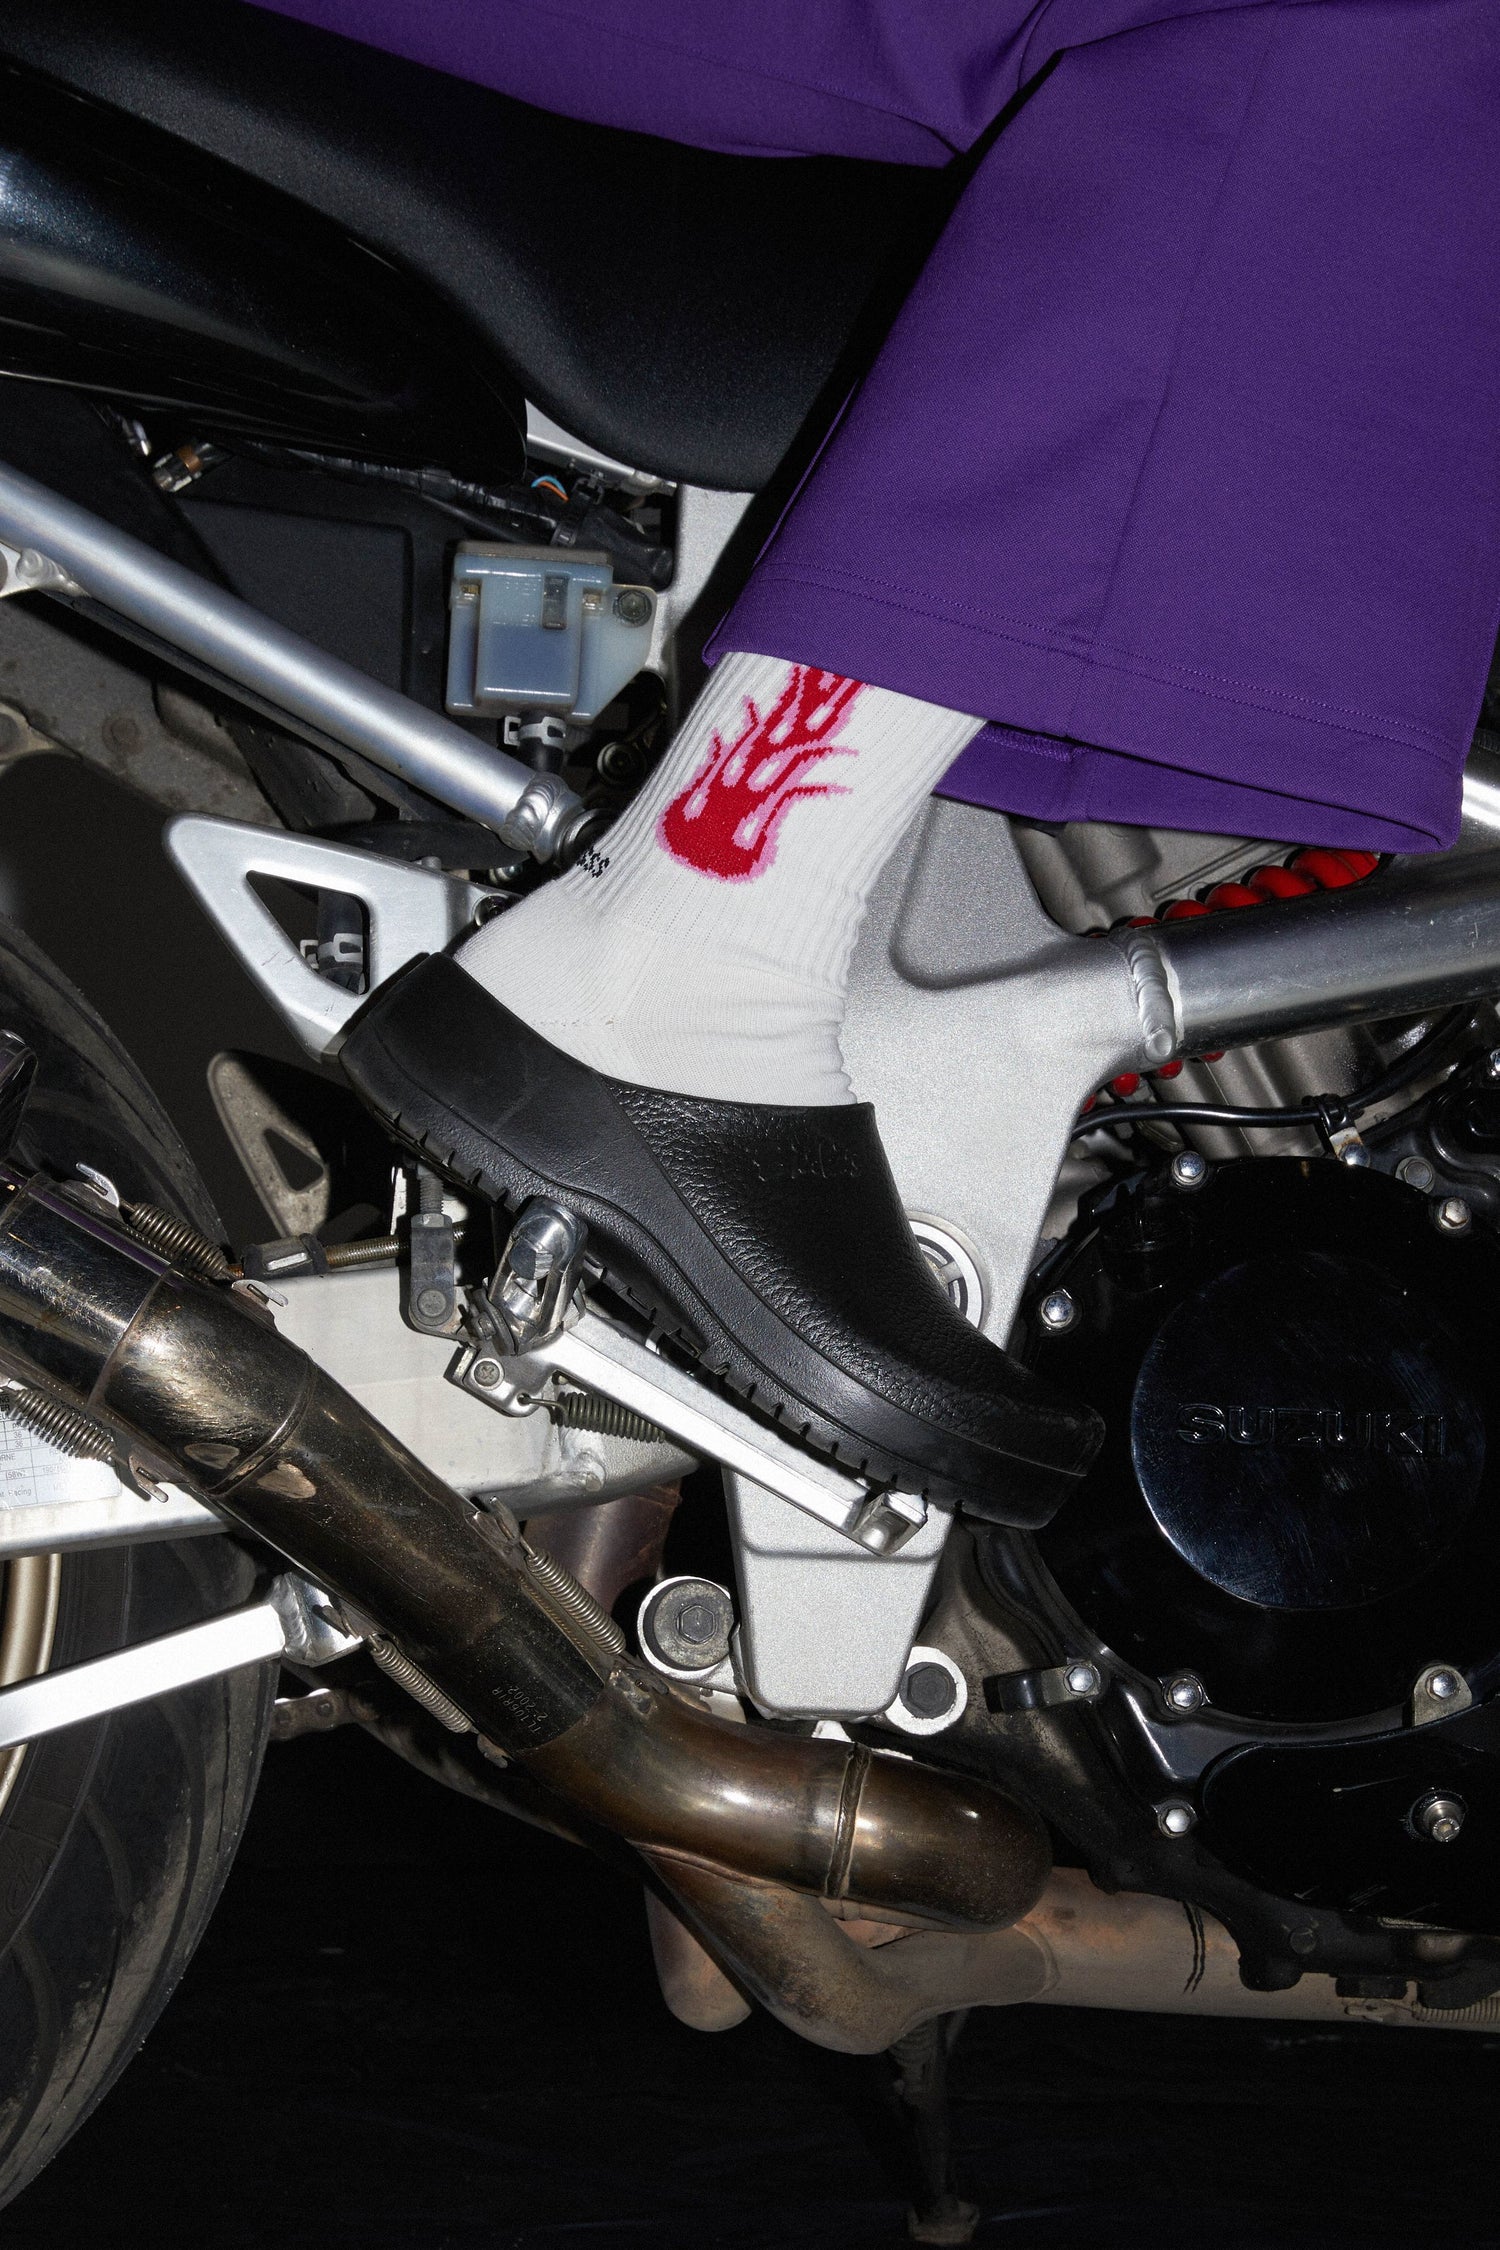 'Arcade Blast' socks, Made in Japan